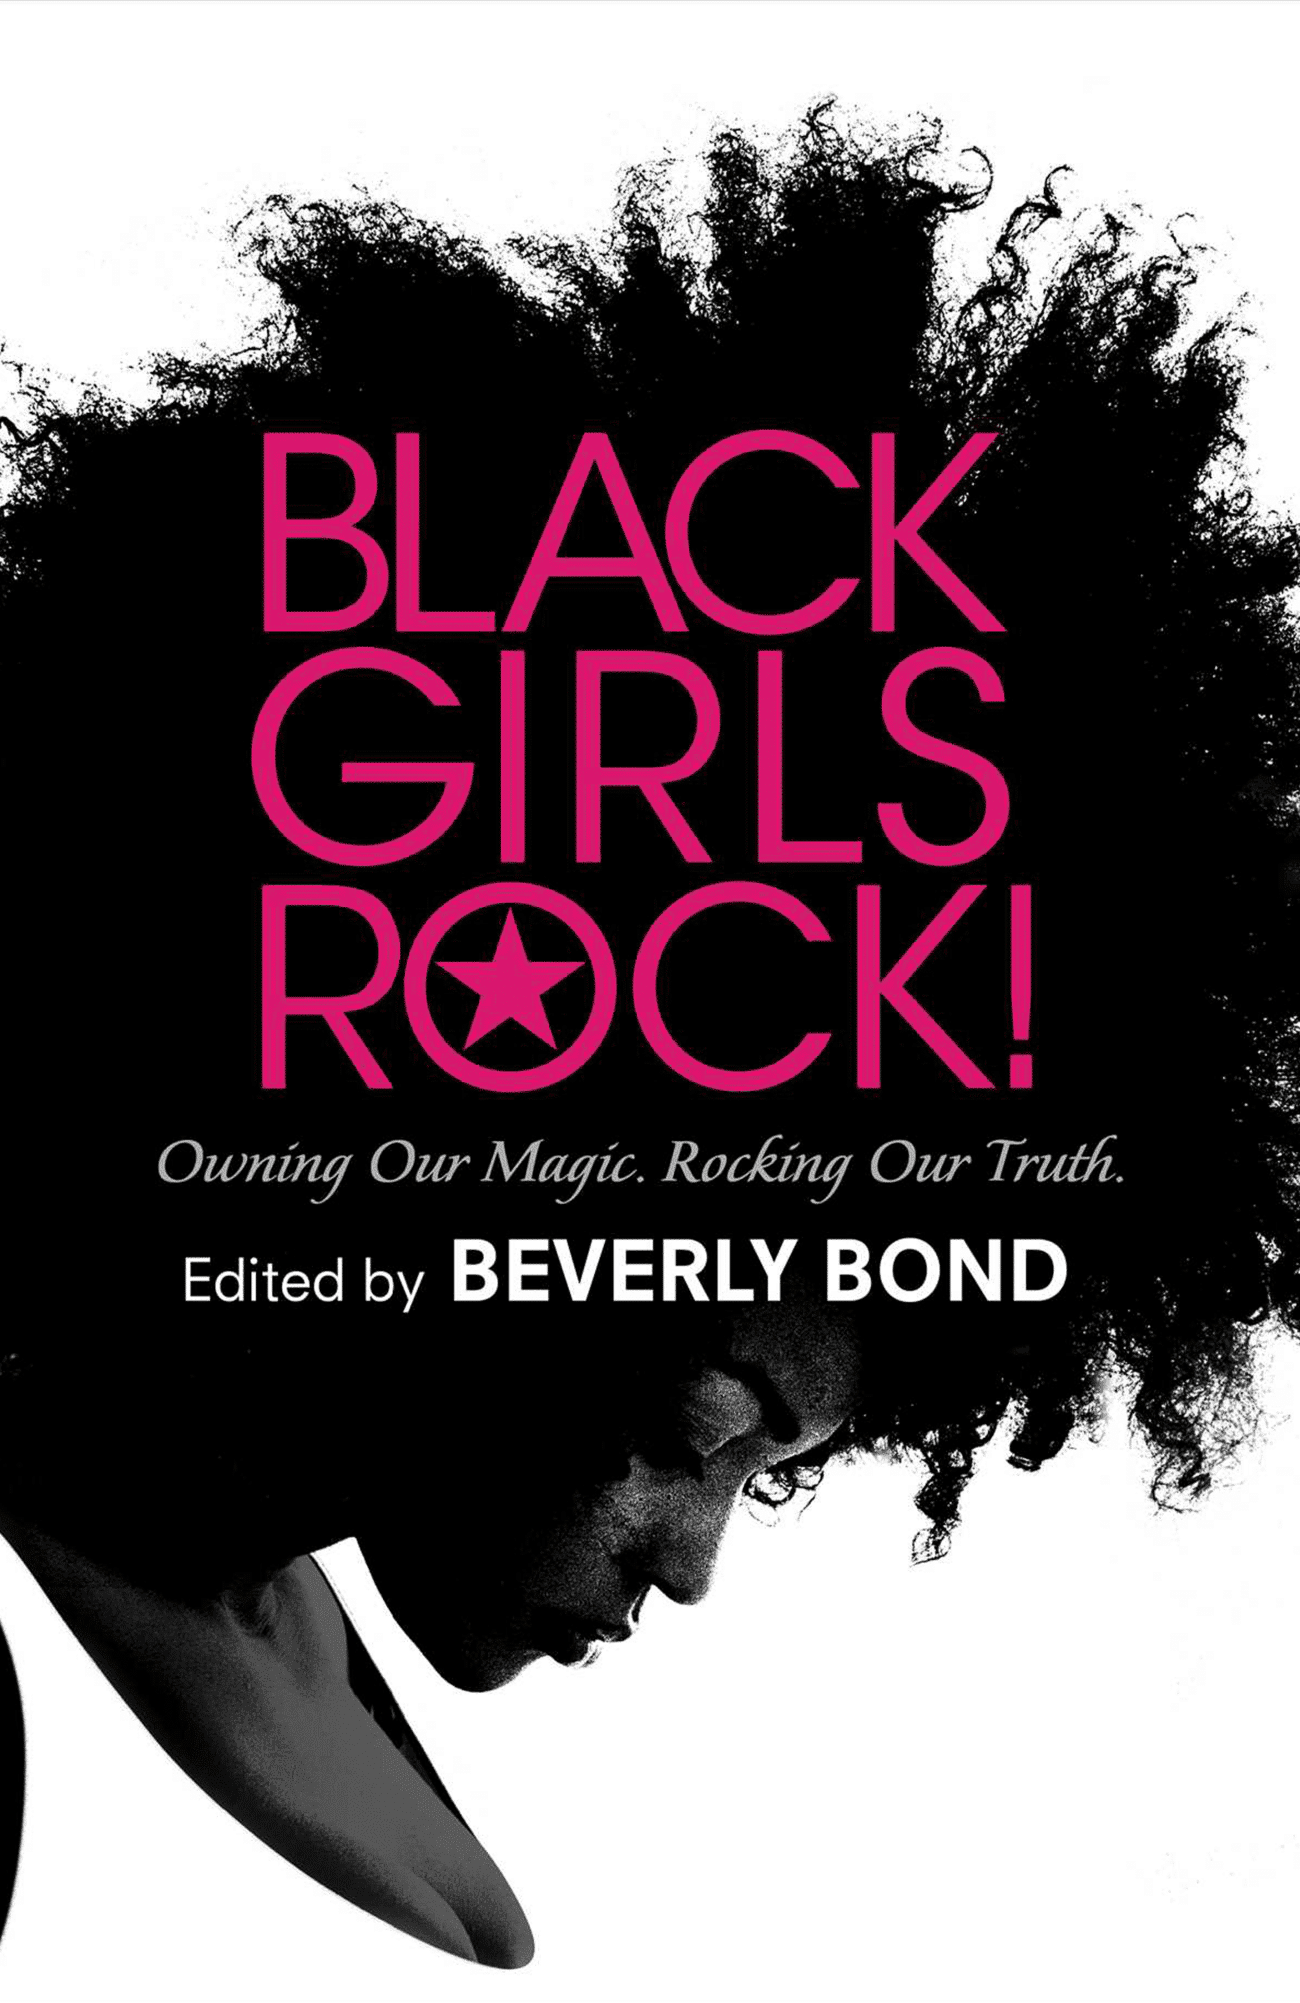 Black Girls Rock - Book Cover - Beverly Bond